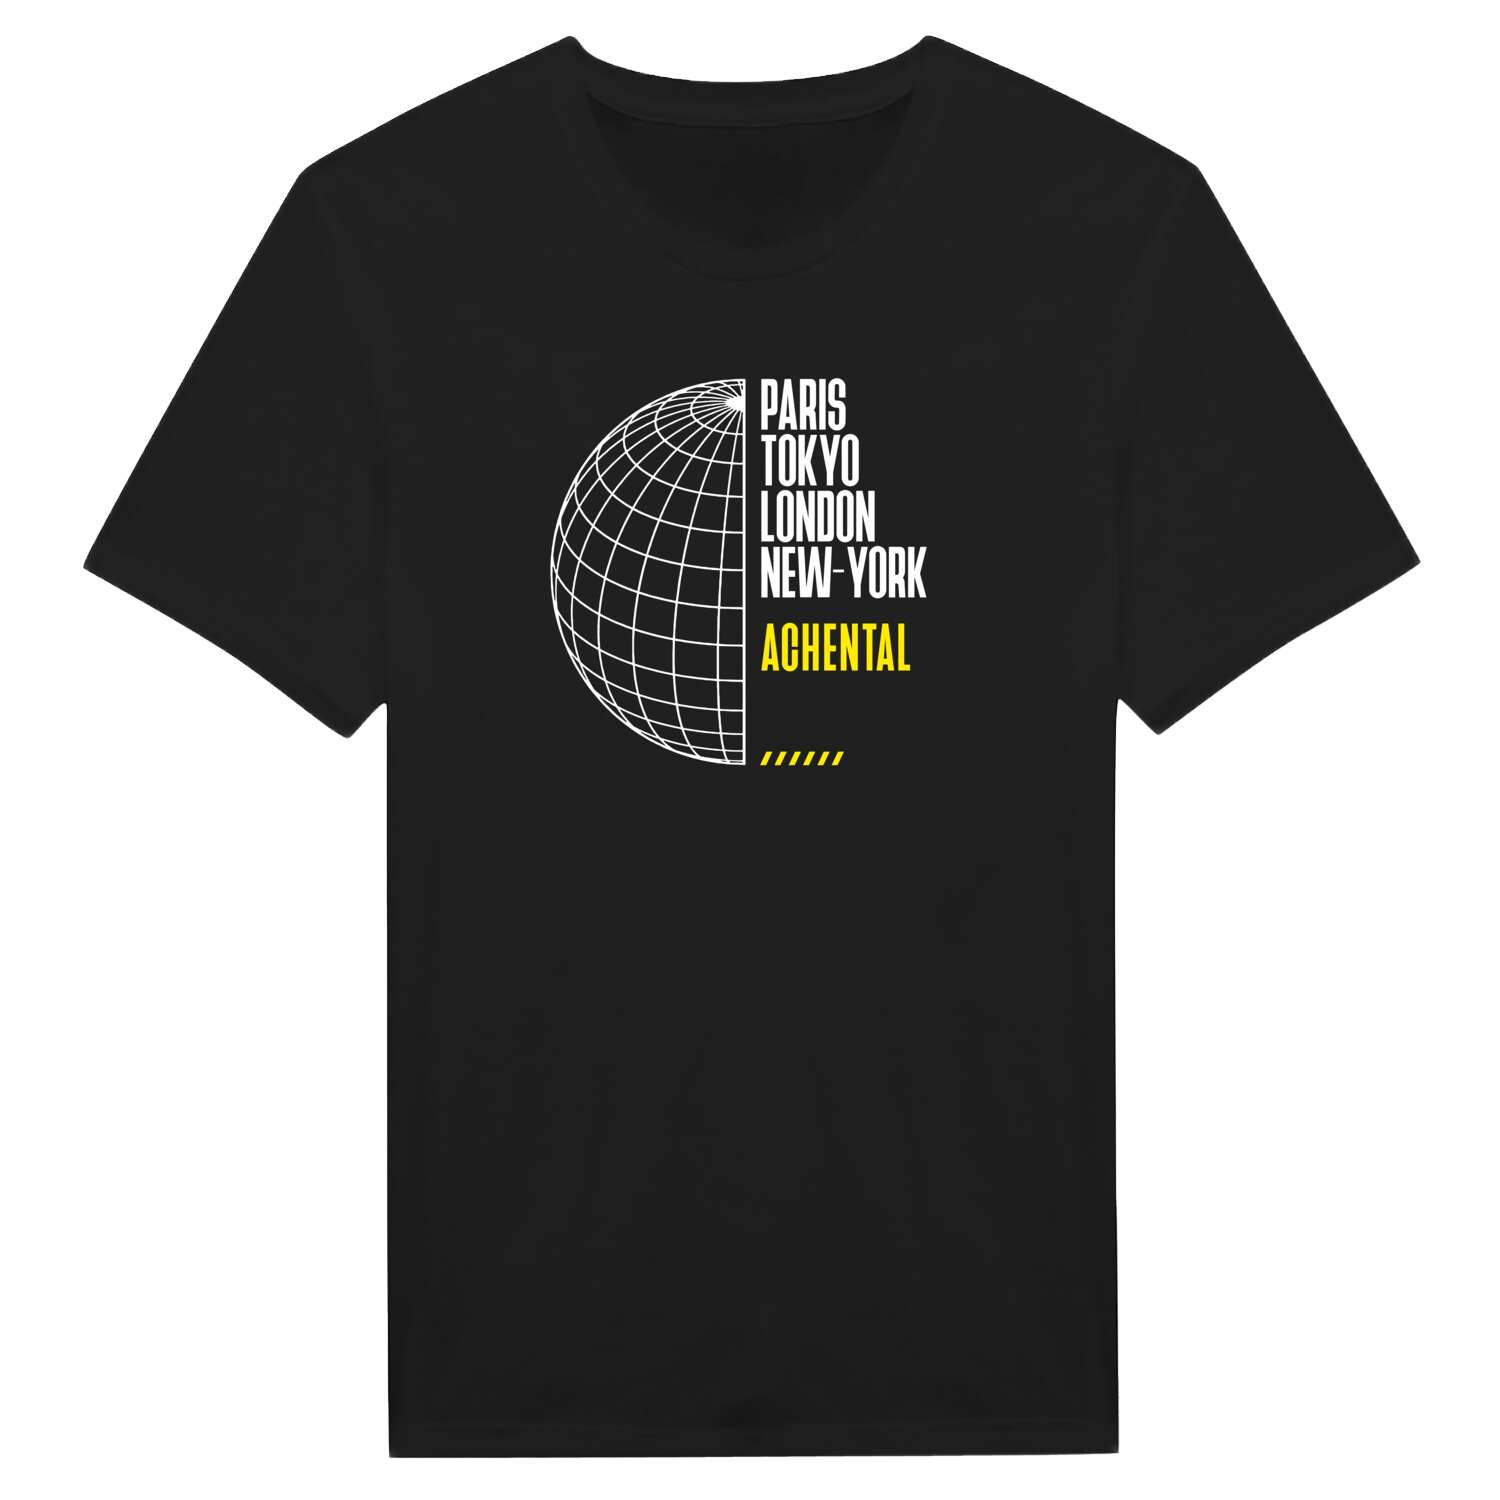 Achental T-Shirt »Paris Tokyo London«